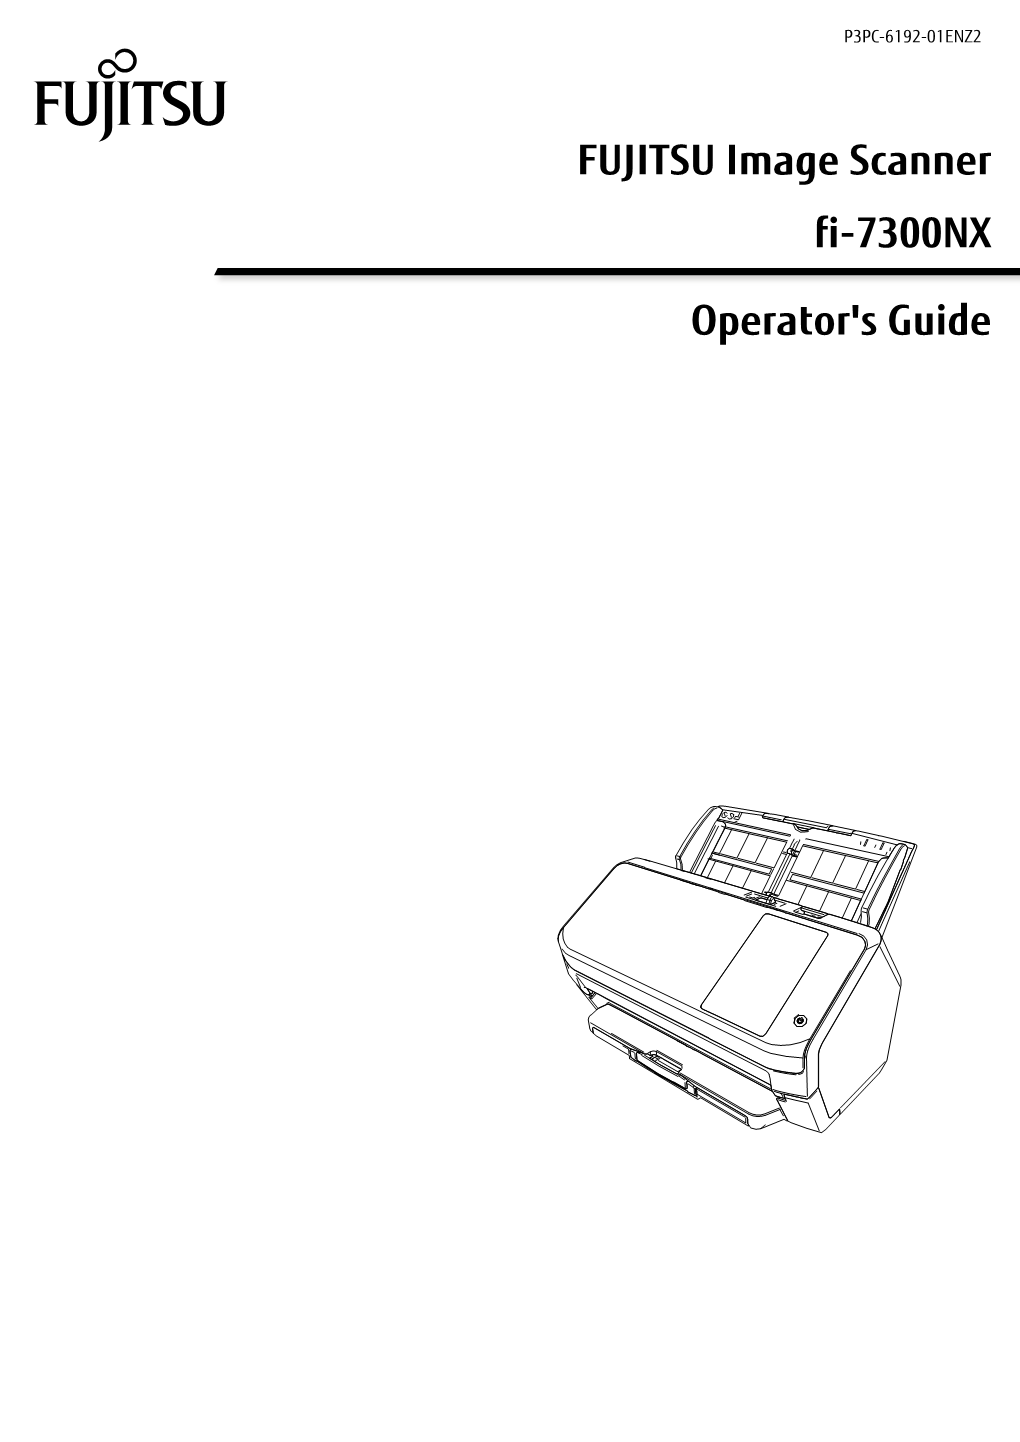 FUJITSU Image Scanner Fi-7300NX Operator's Guide